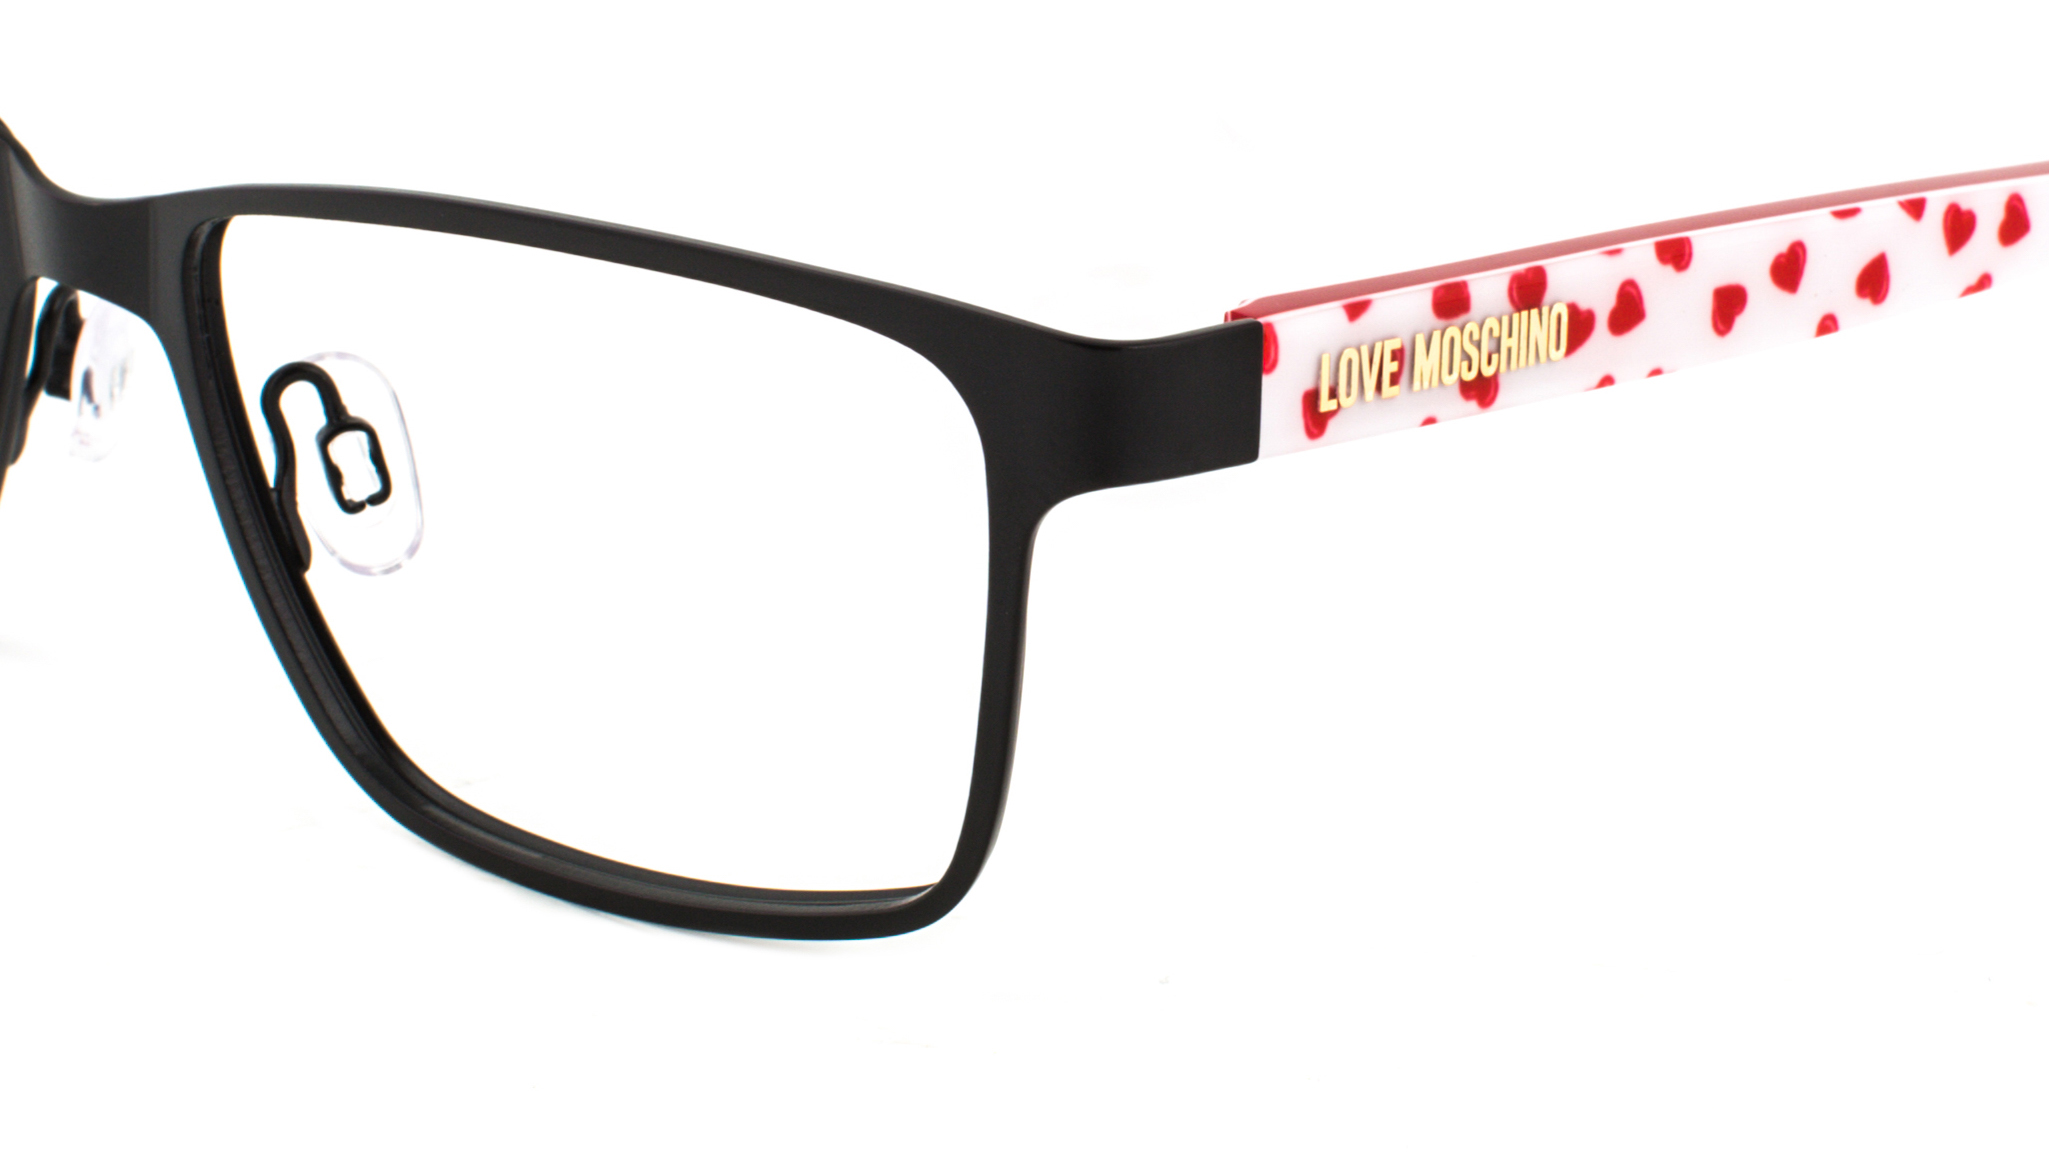 specsavers moschino glasses